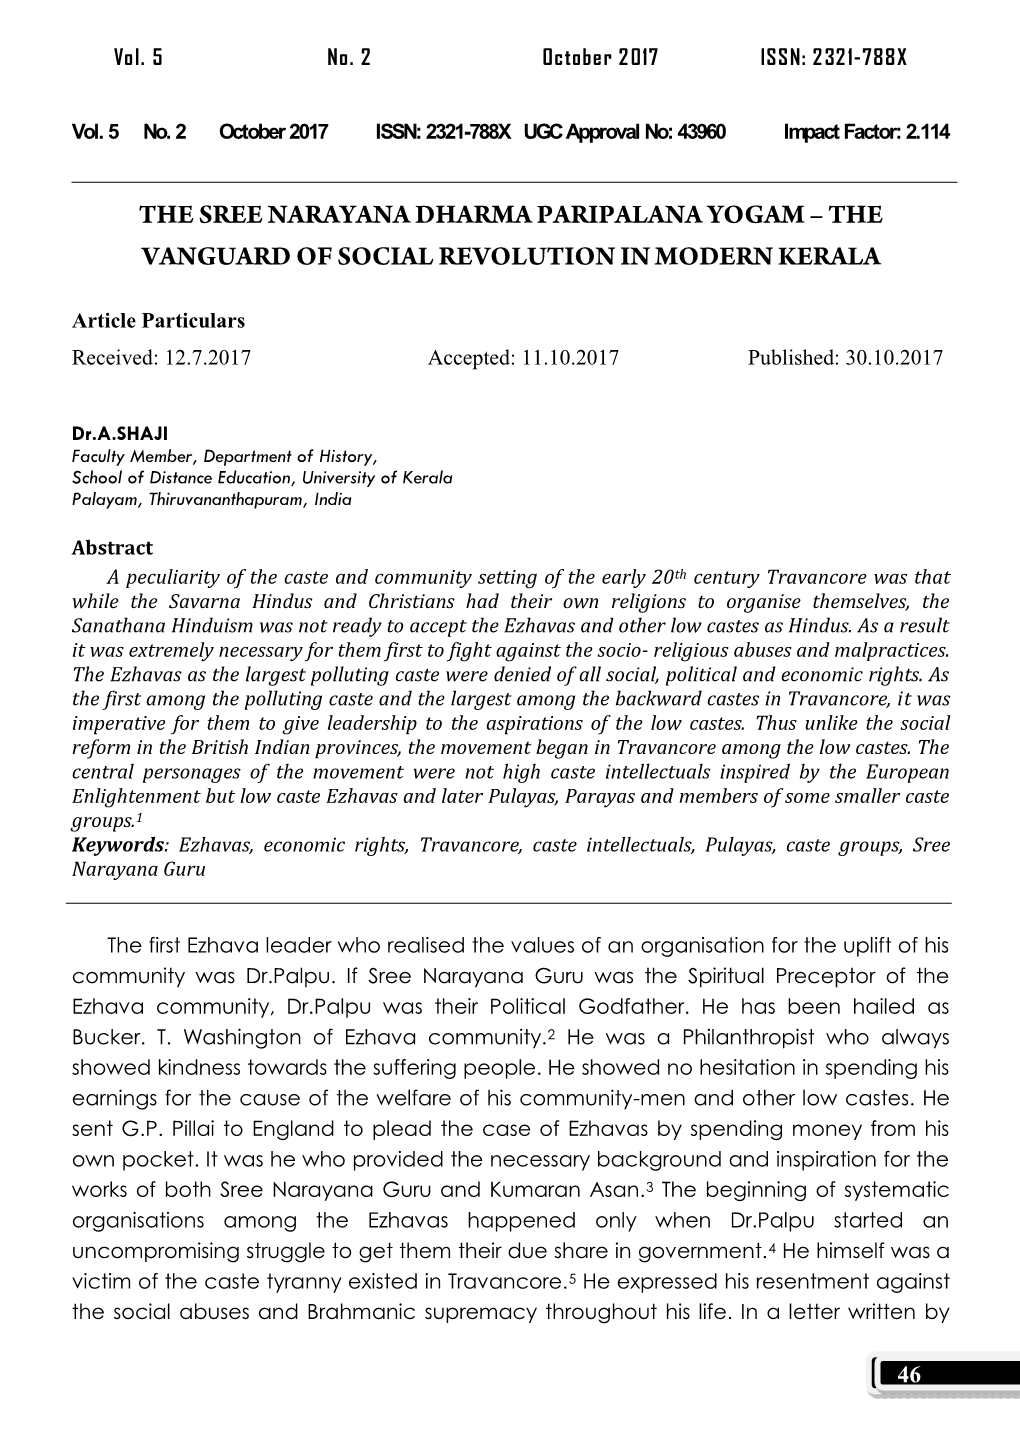 The Sree Narayana Dharma Paripalana Yogam – the Vanguard of Social Revolution in Modern Kerala